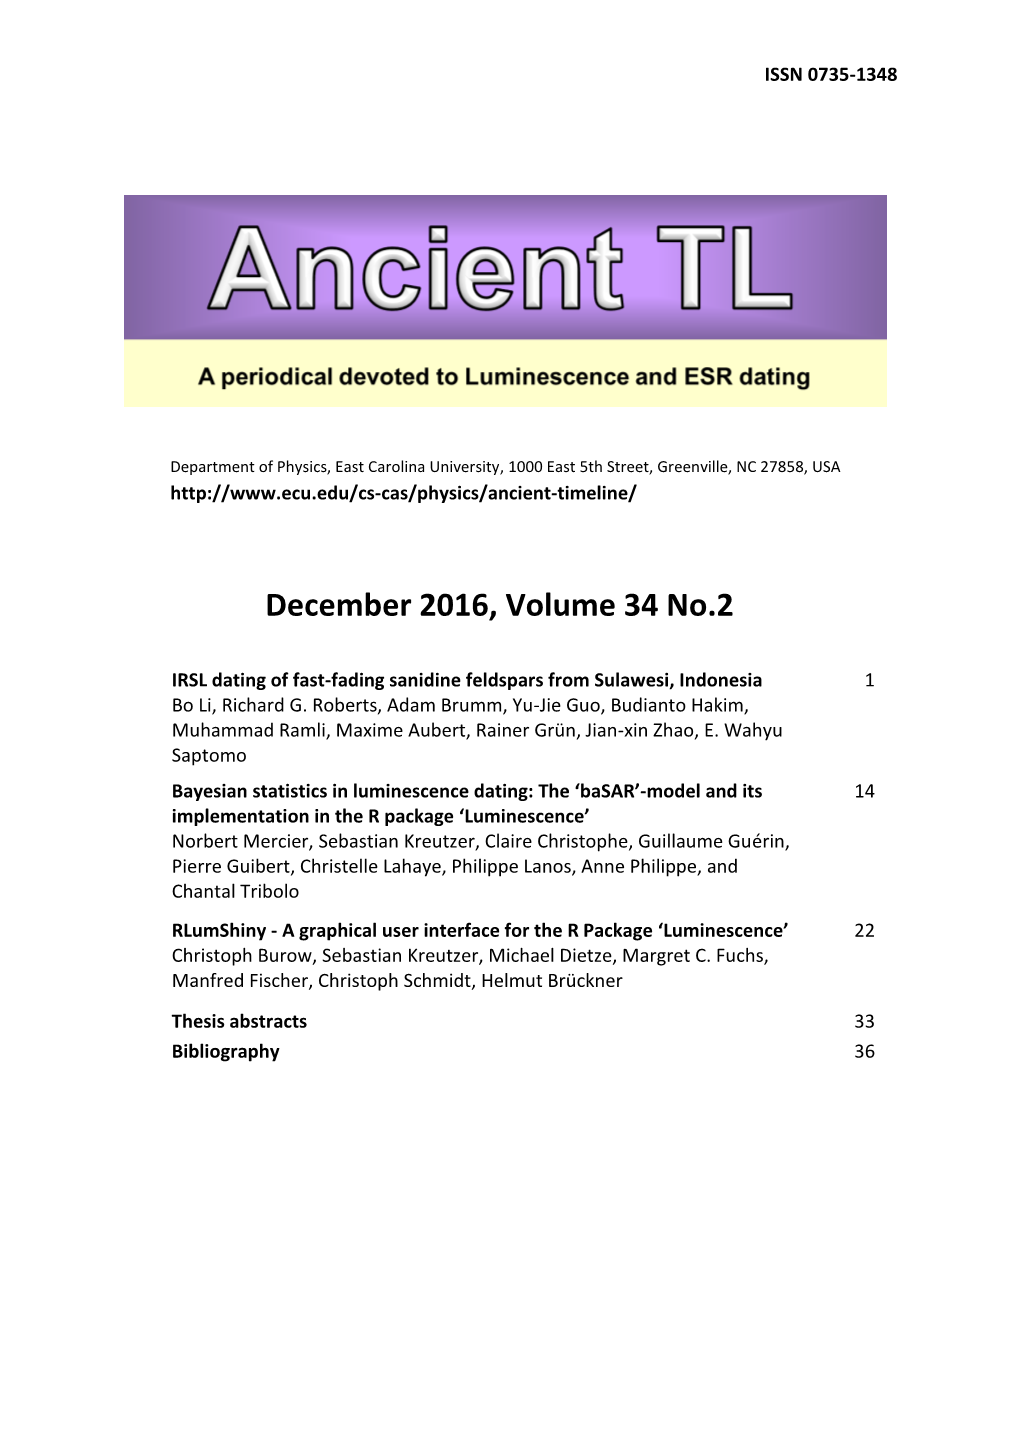 December 2016, Volume 34 No.2